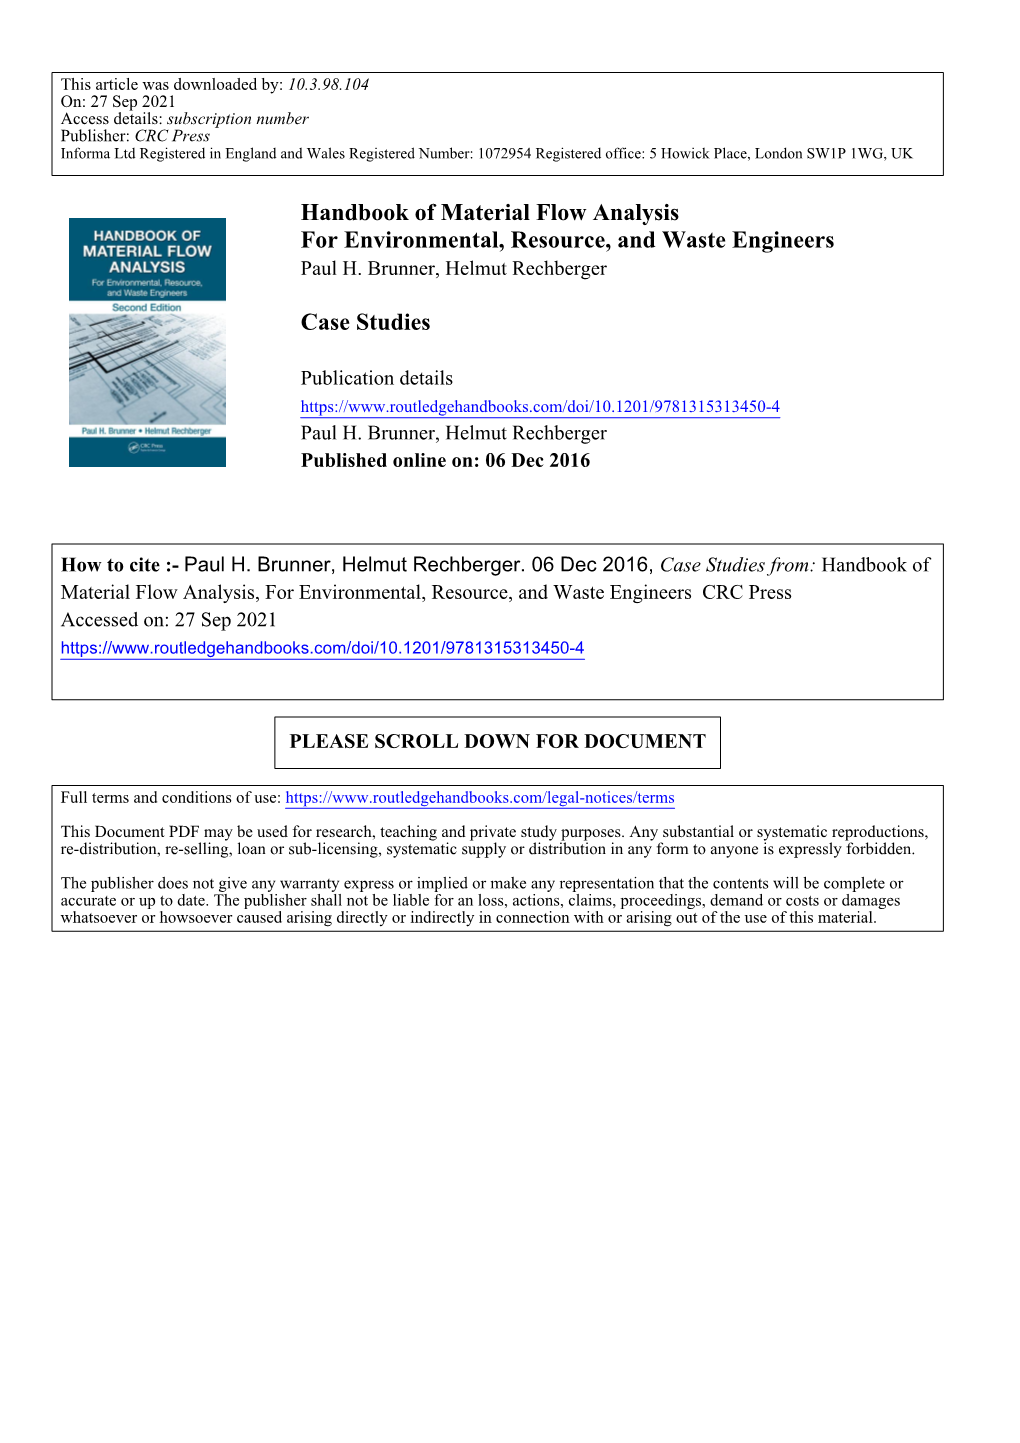 Handbook of Material Flow Analysis for Environmental, Resource, and Waste Engineers Case Studies